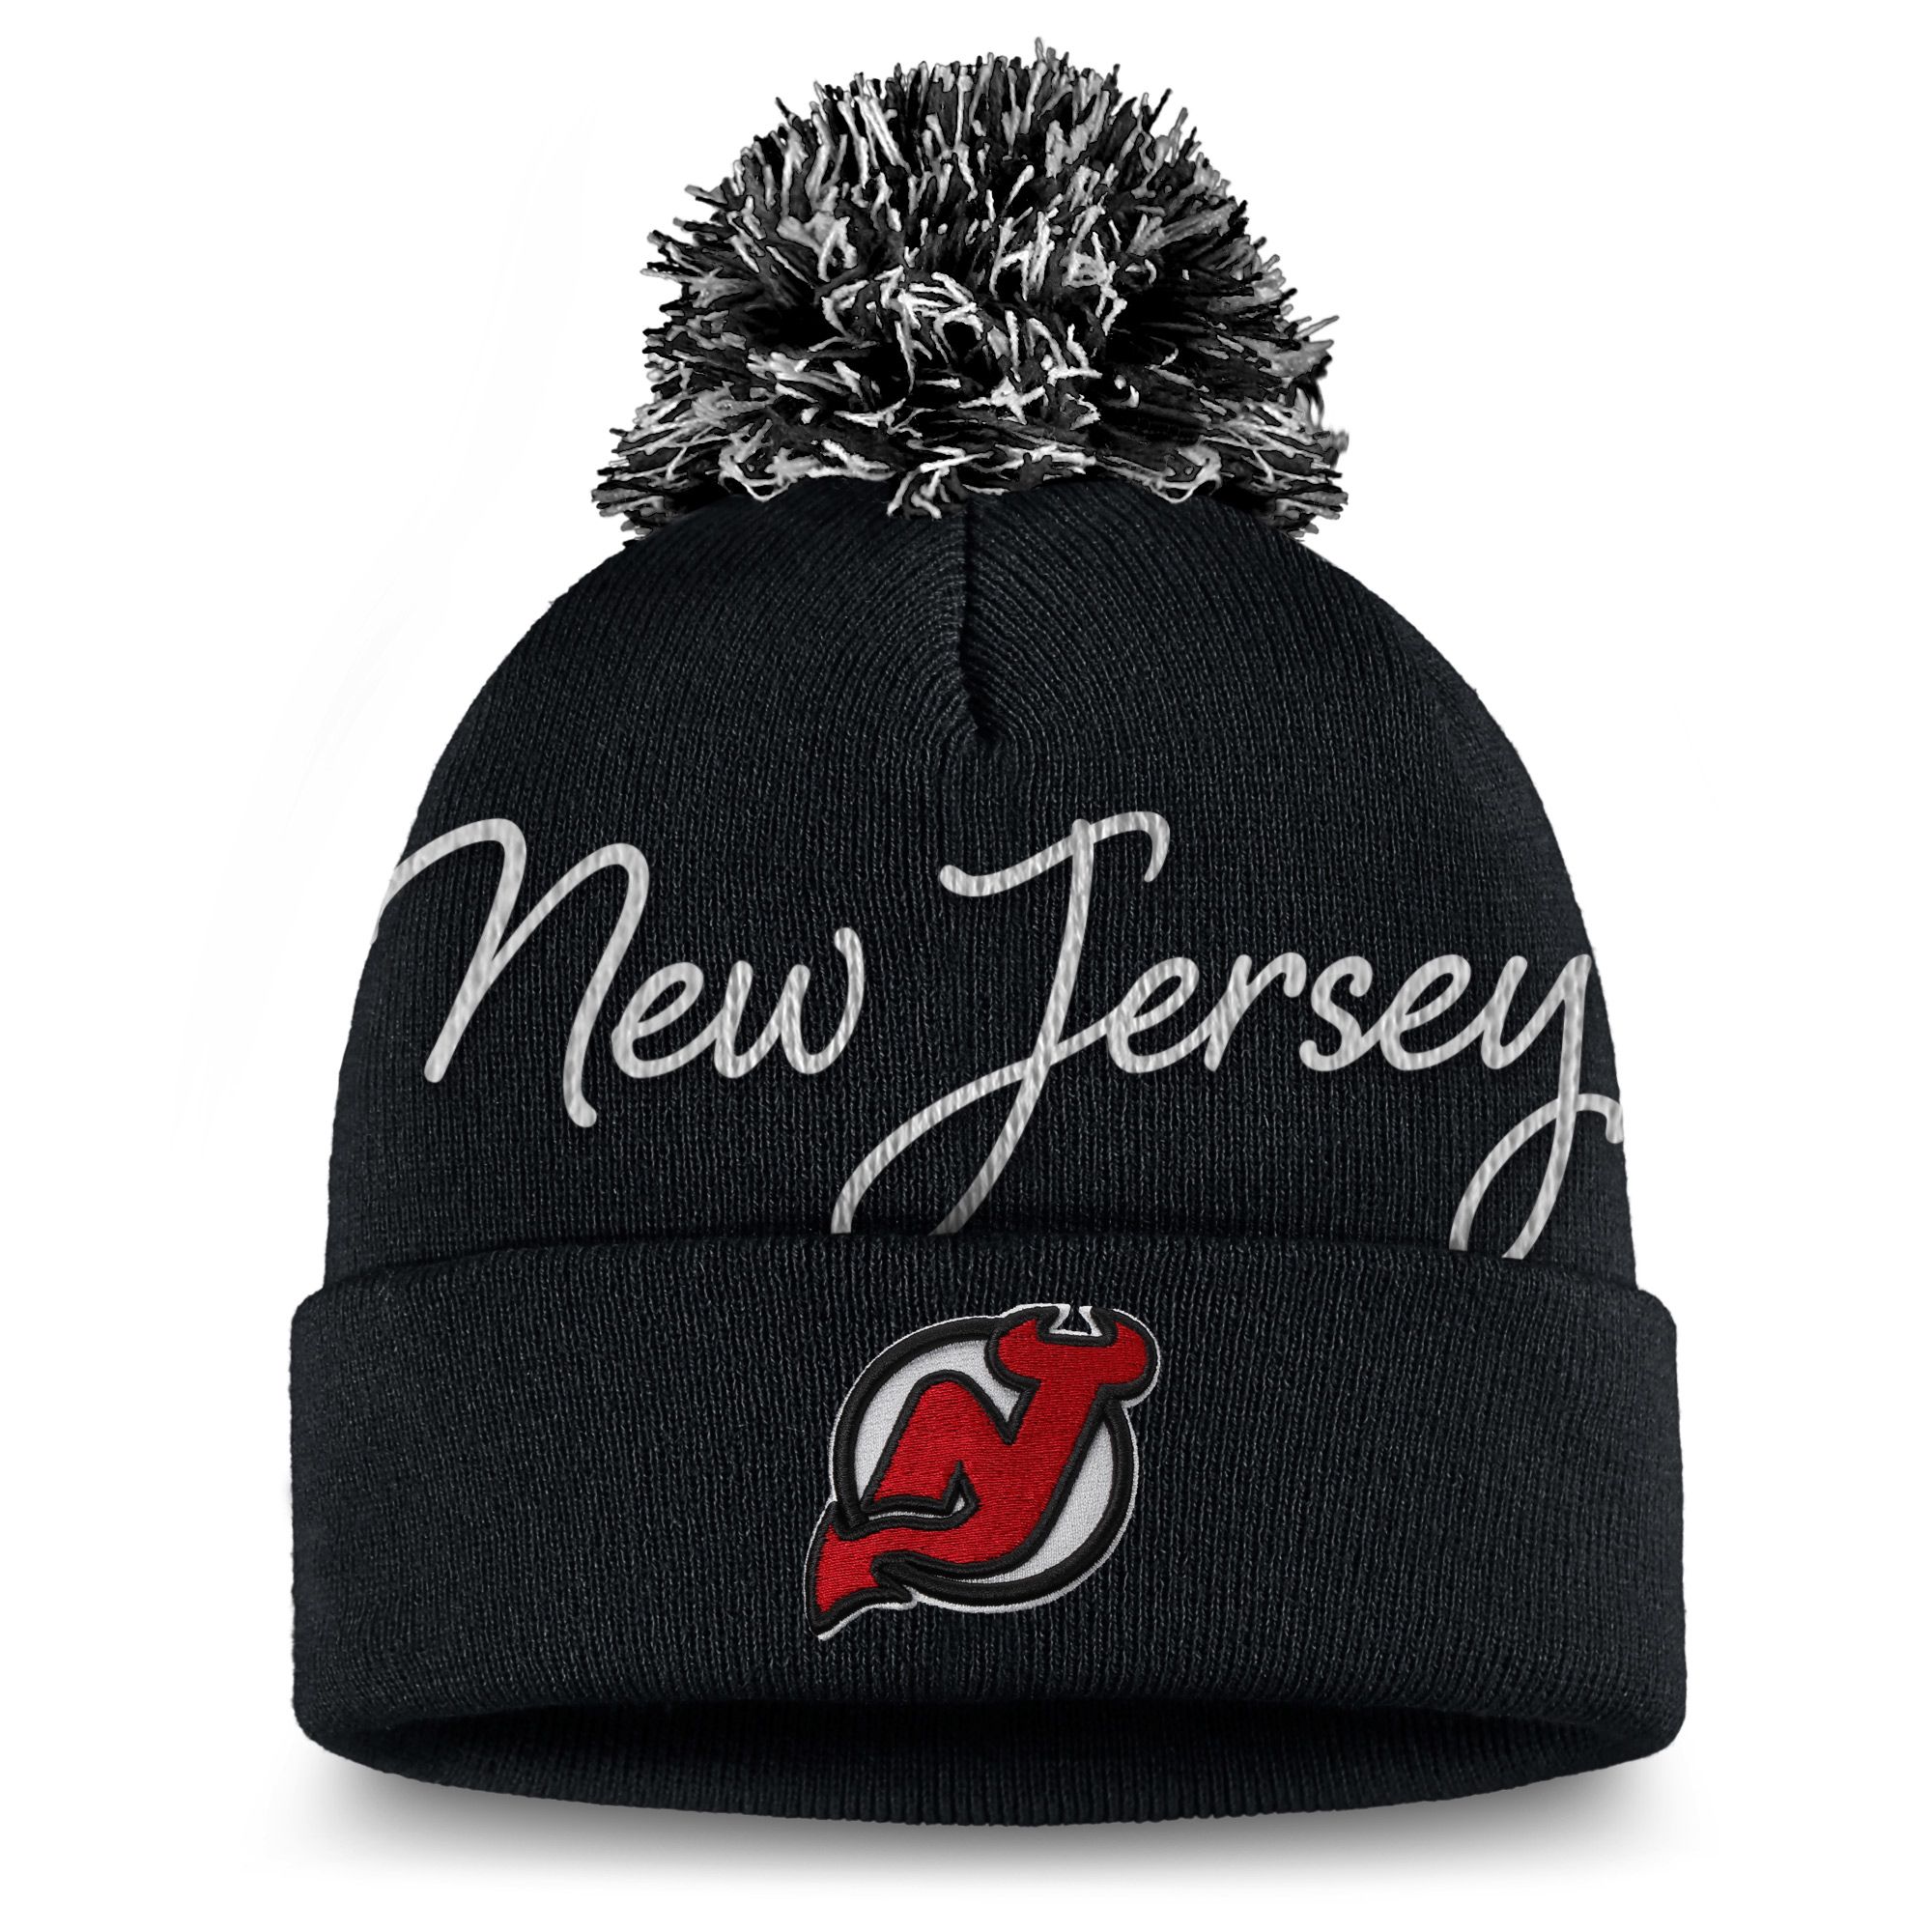 Brand new New Jersey Devils beanie FIRM